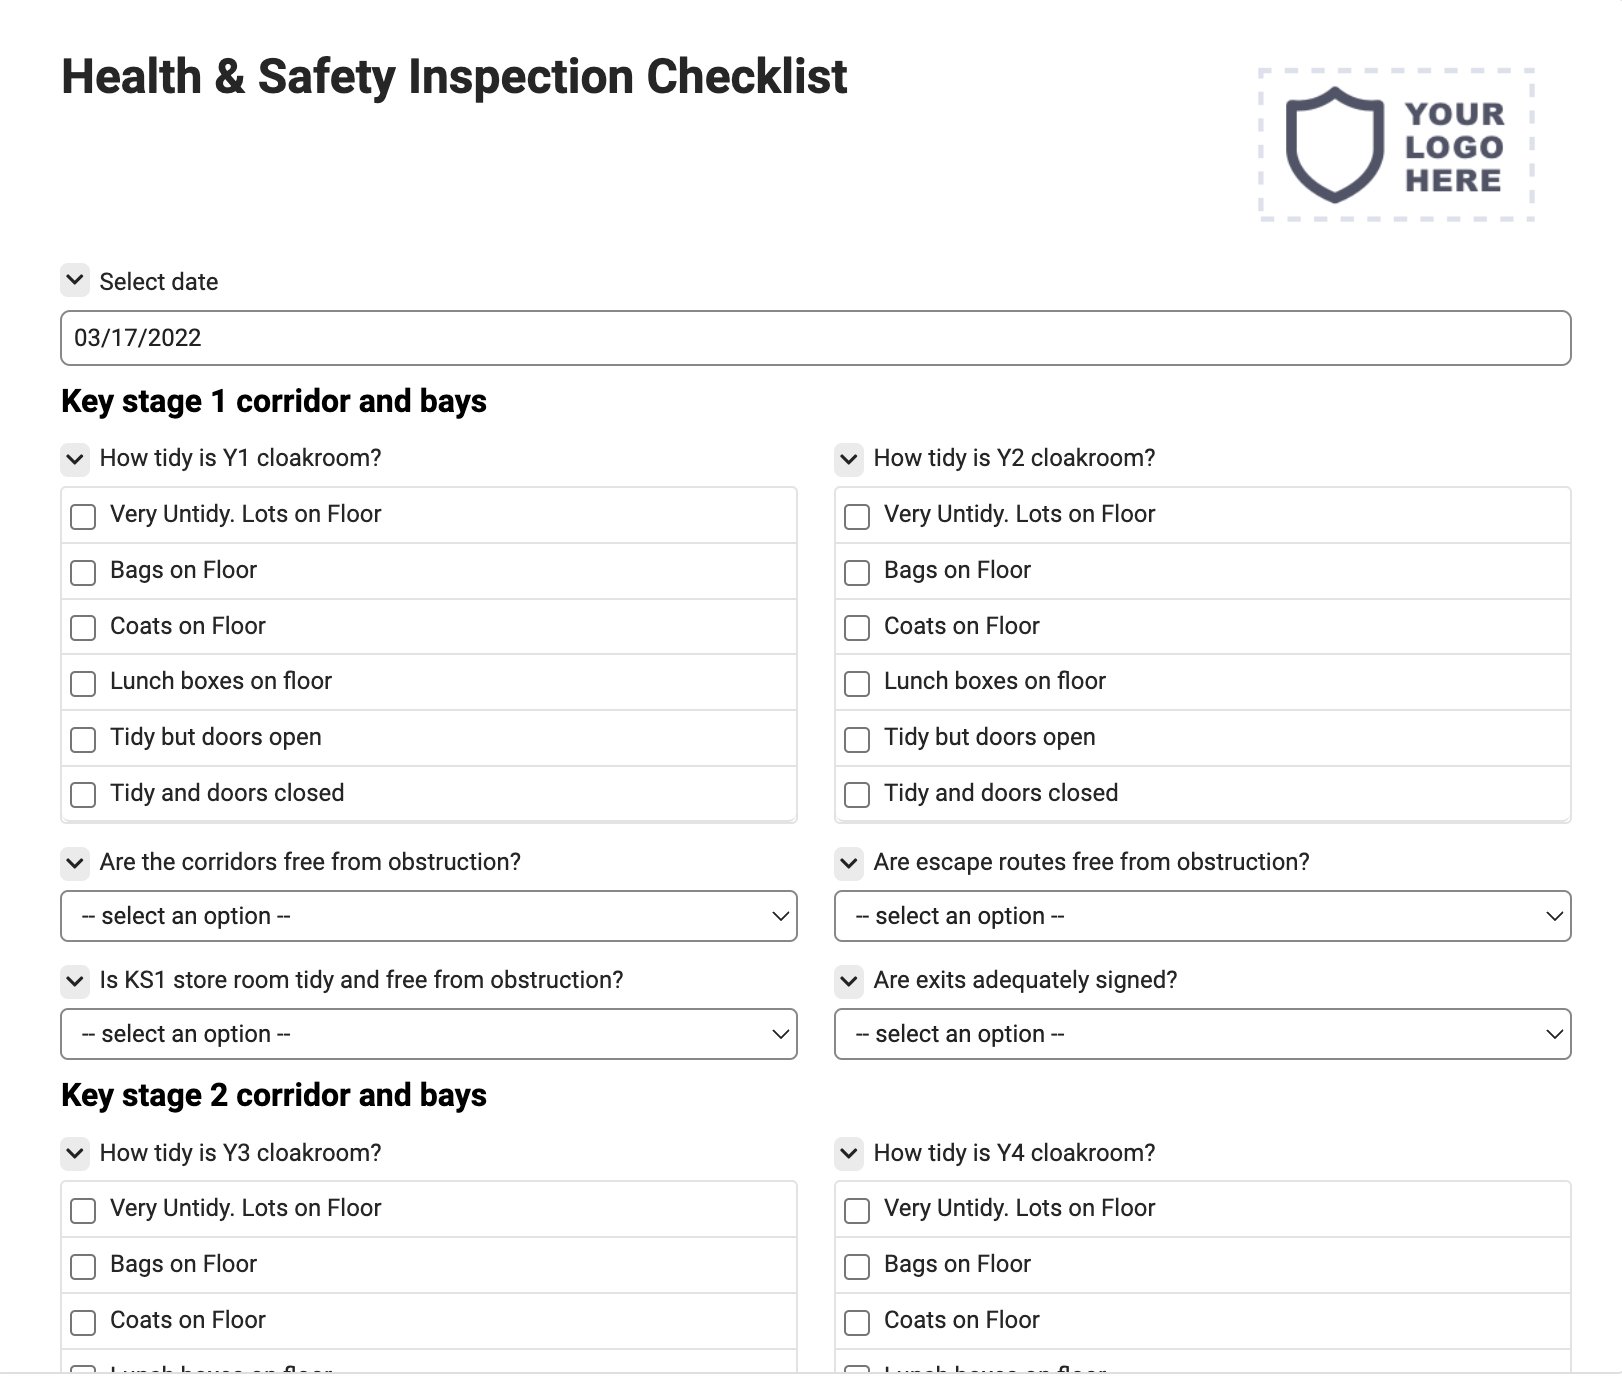 Health & Safety Inspection Checklist